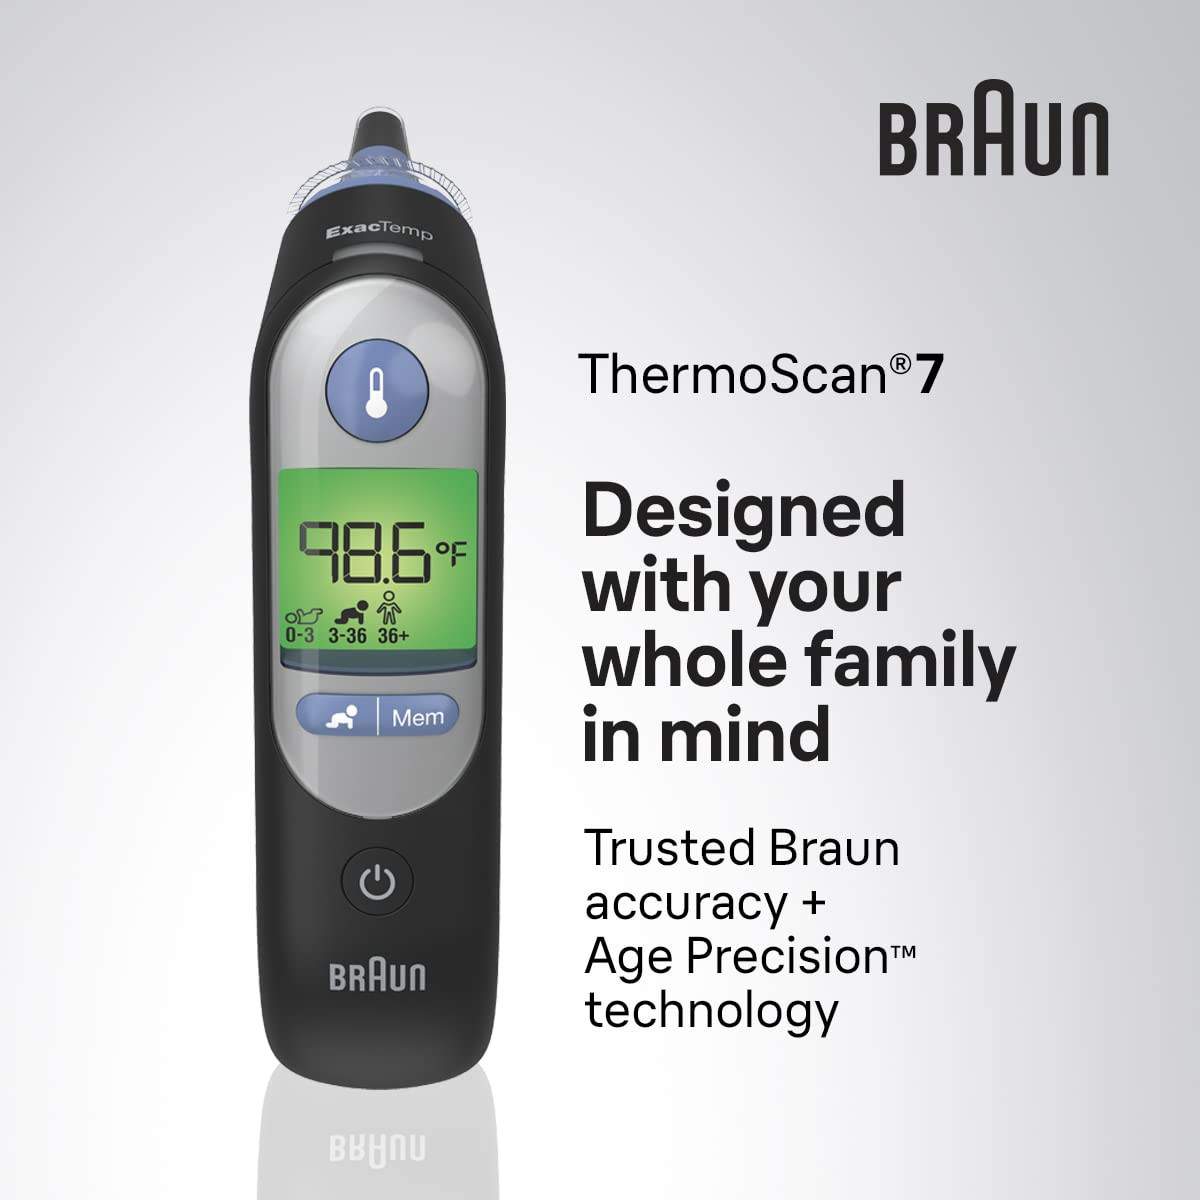 Braun Thermoscan 7 - IRT 6520